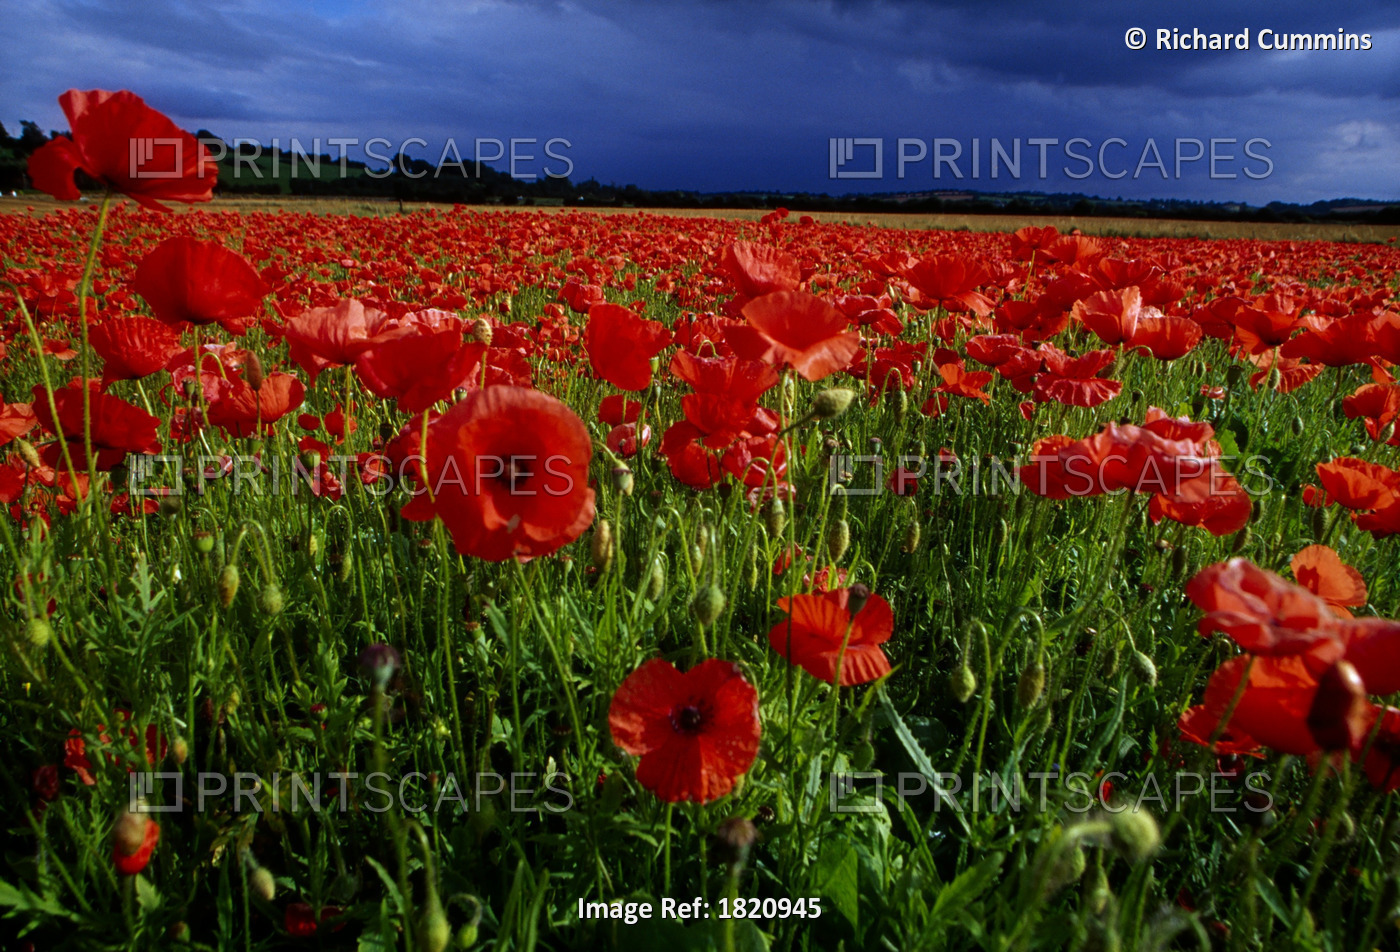 County Kildare, Ireland; Poppy Field